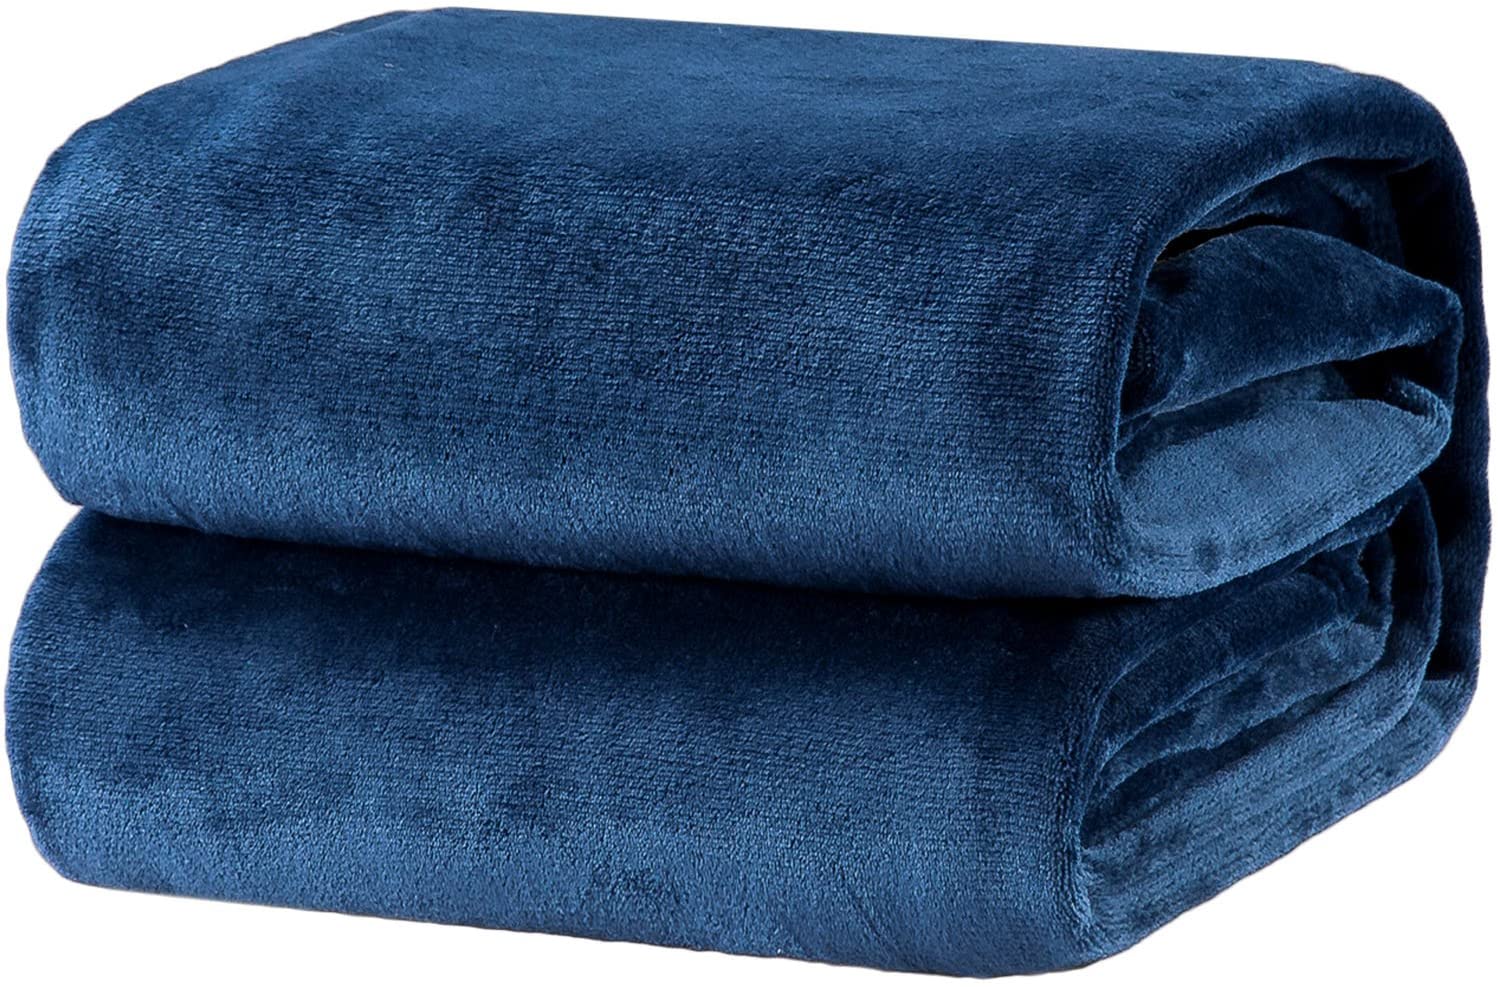 Bedsure Fleece Blanket Throw Size Grey Lightweight Super Soft Cozy Luxury Bed Bl 